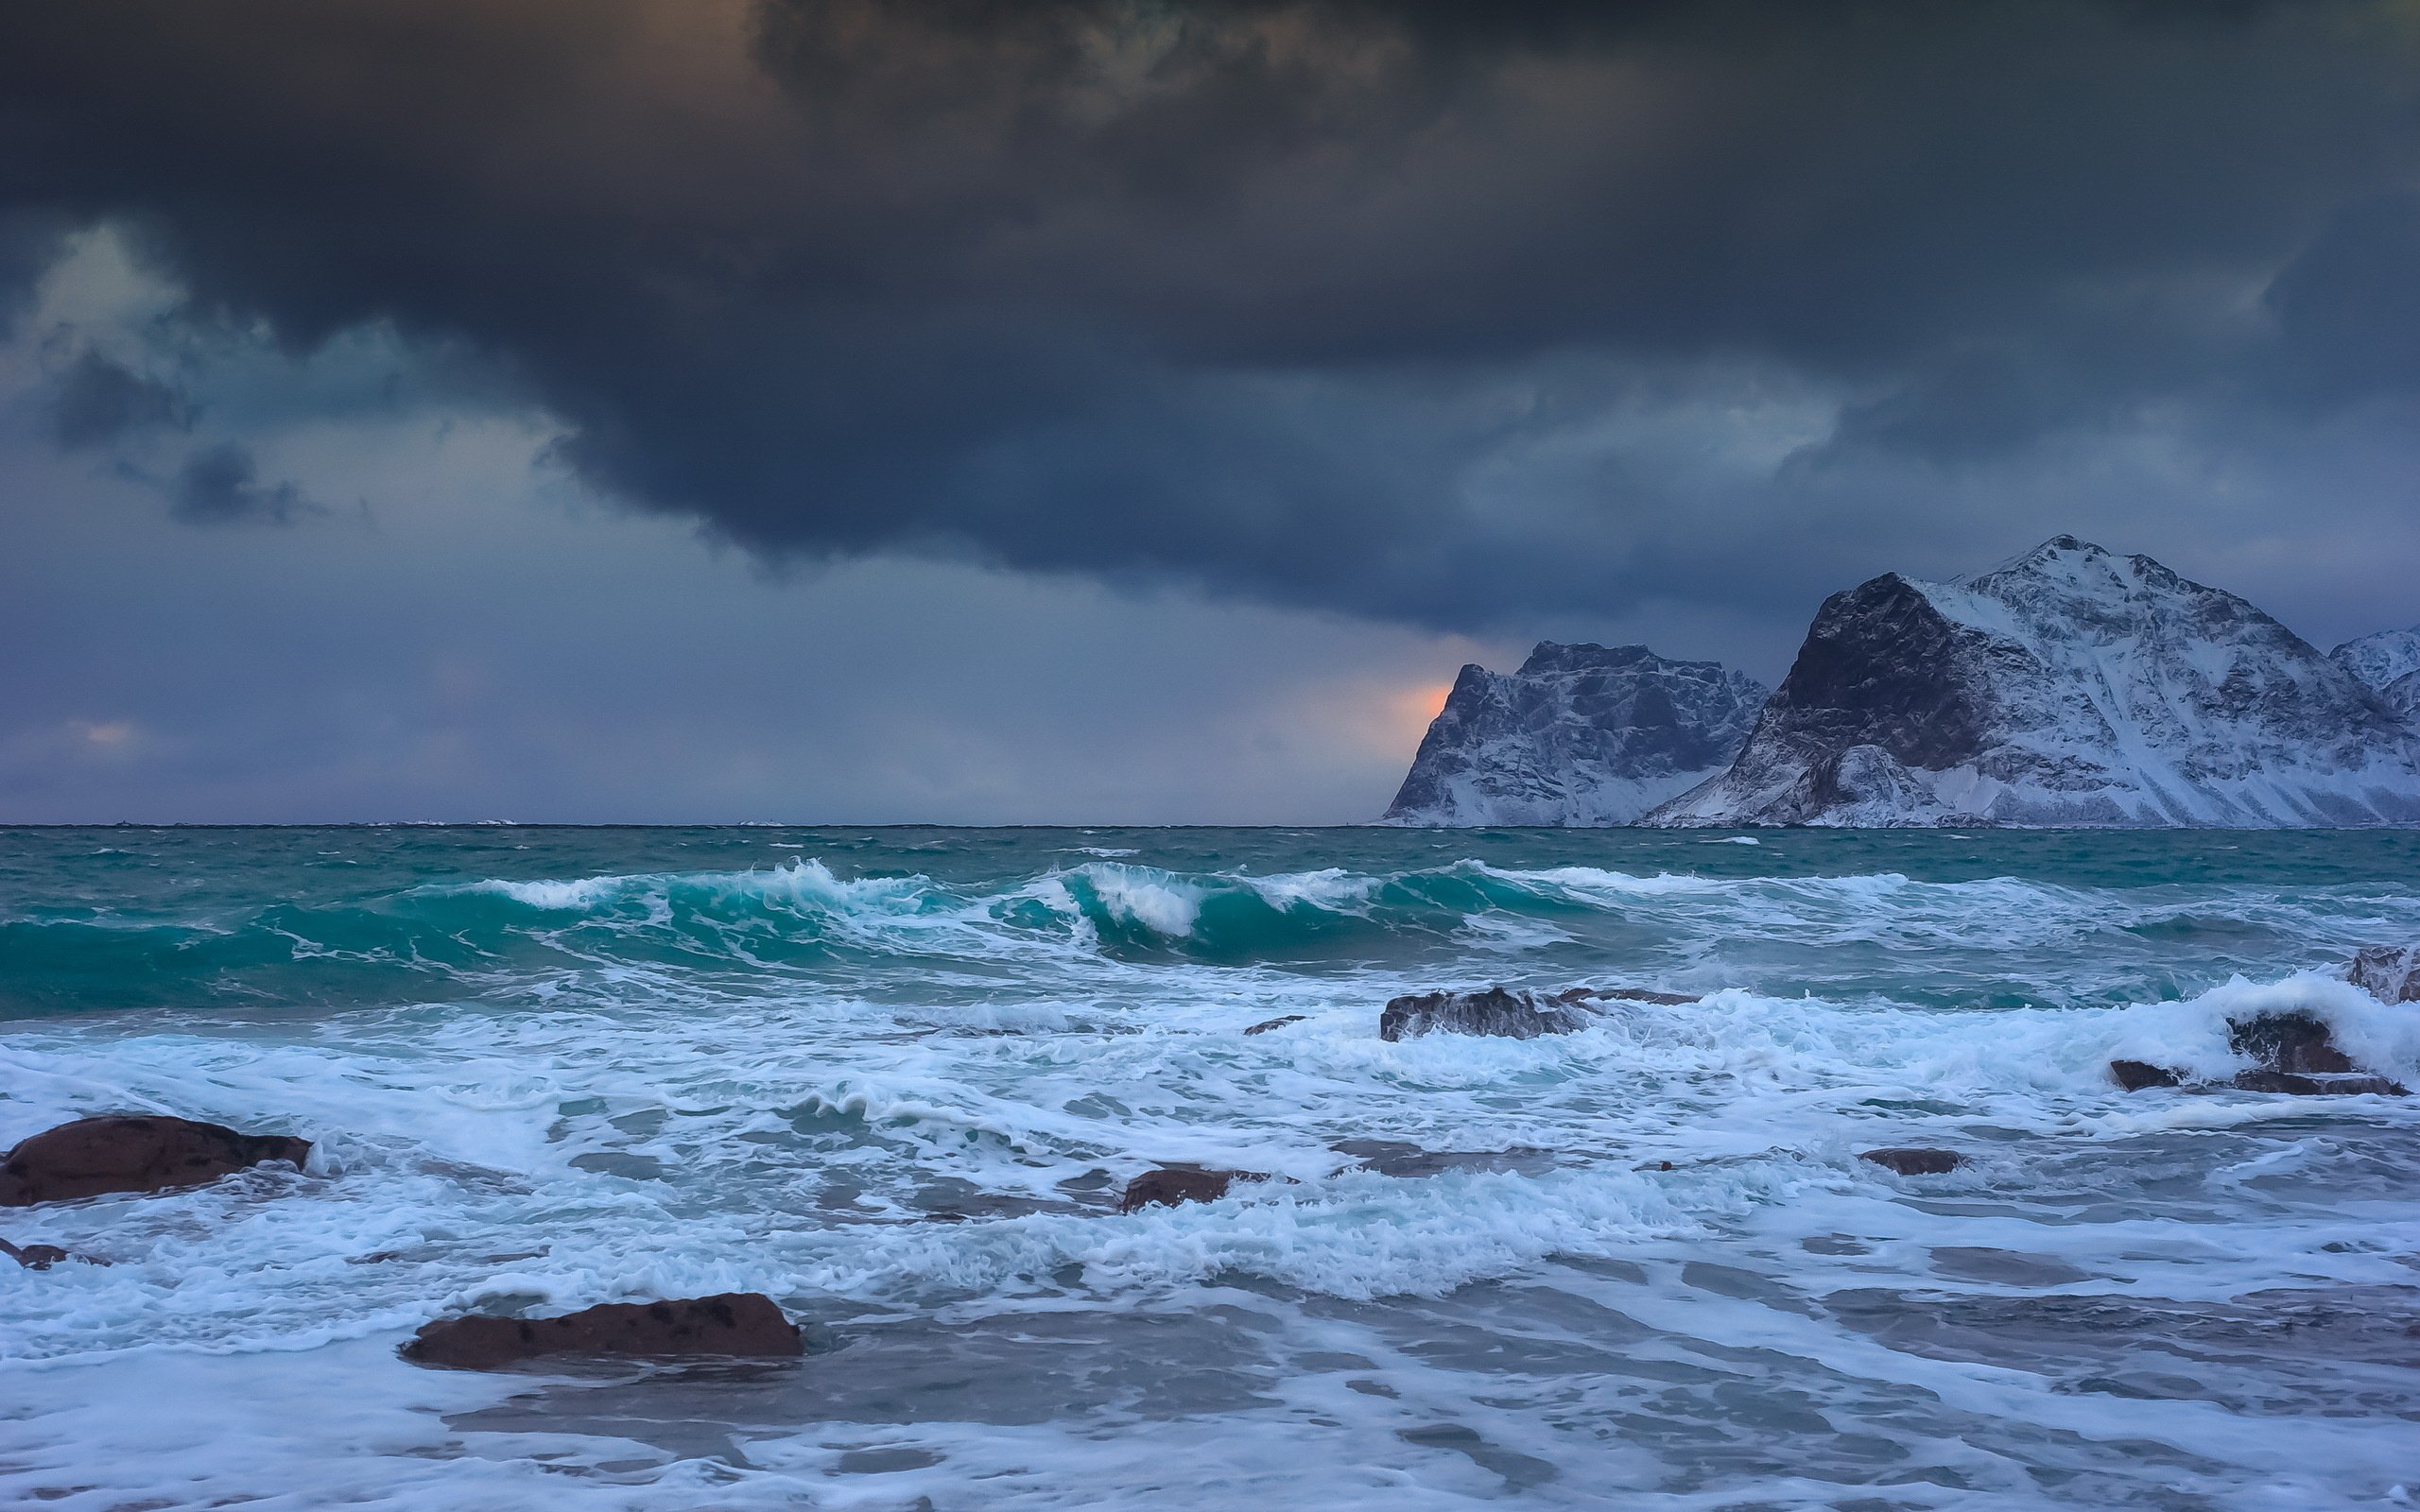 Про море шторм. Бискайский залив шторм. Берингово море шторм. Исландия Атлантический океан берег шторм. Карибское море Атлантический океан.